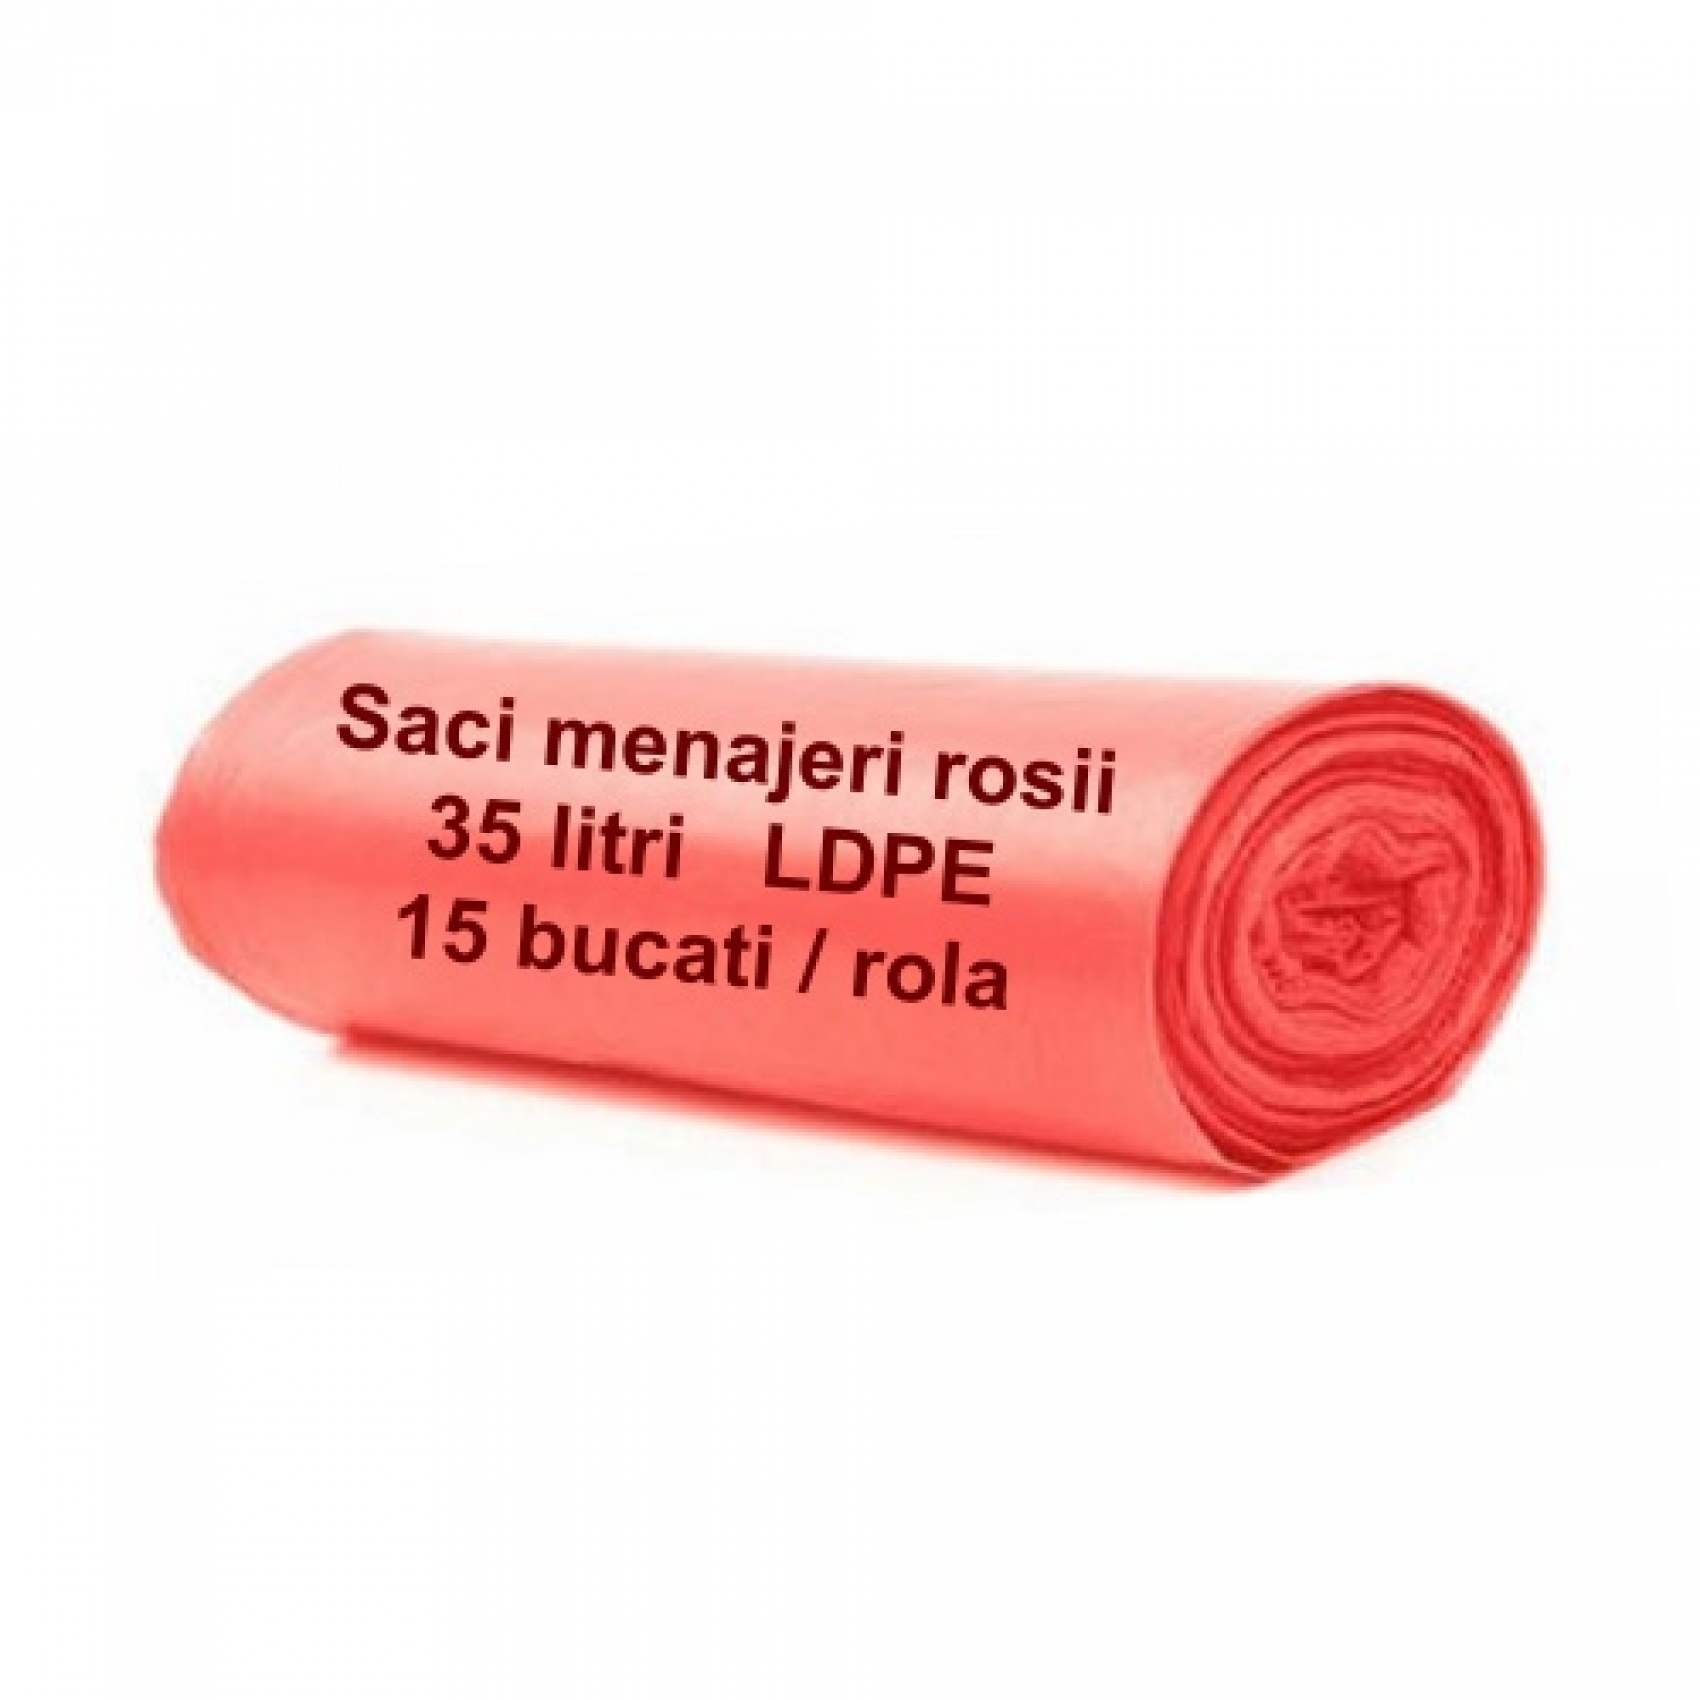 Saci menajeri rosii 35 litri LDPE - 15 buc/rola